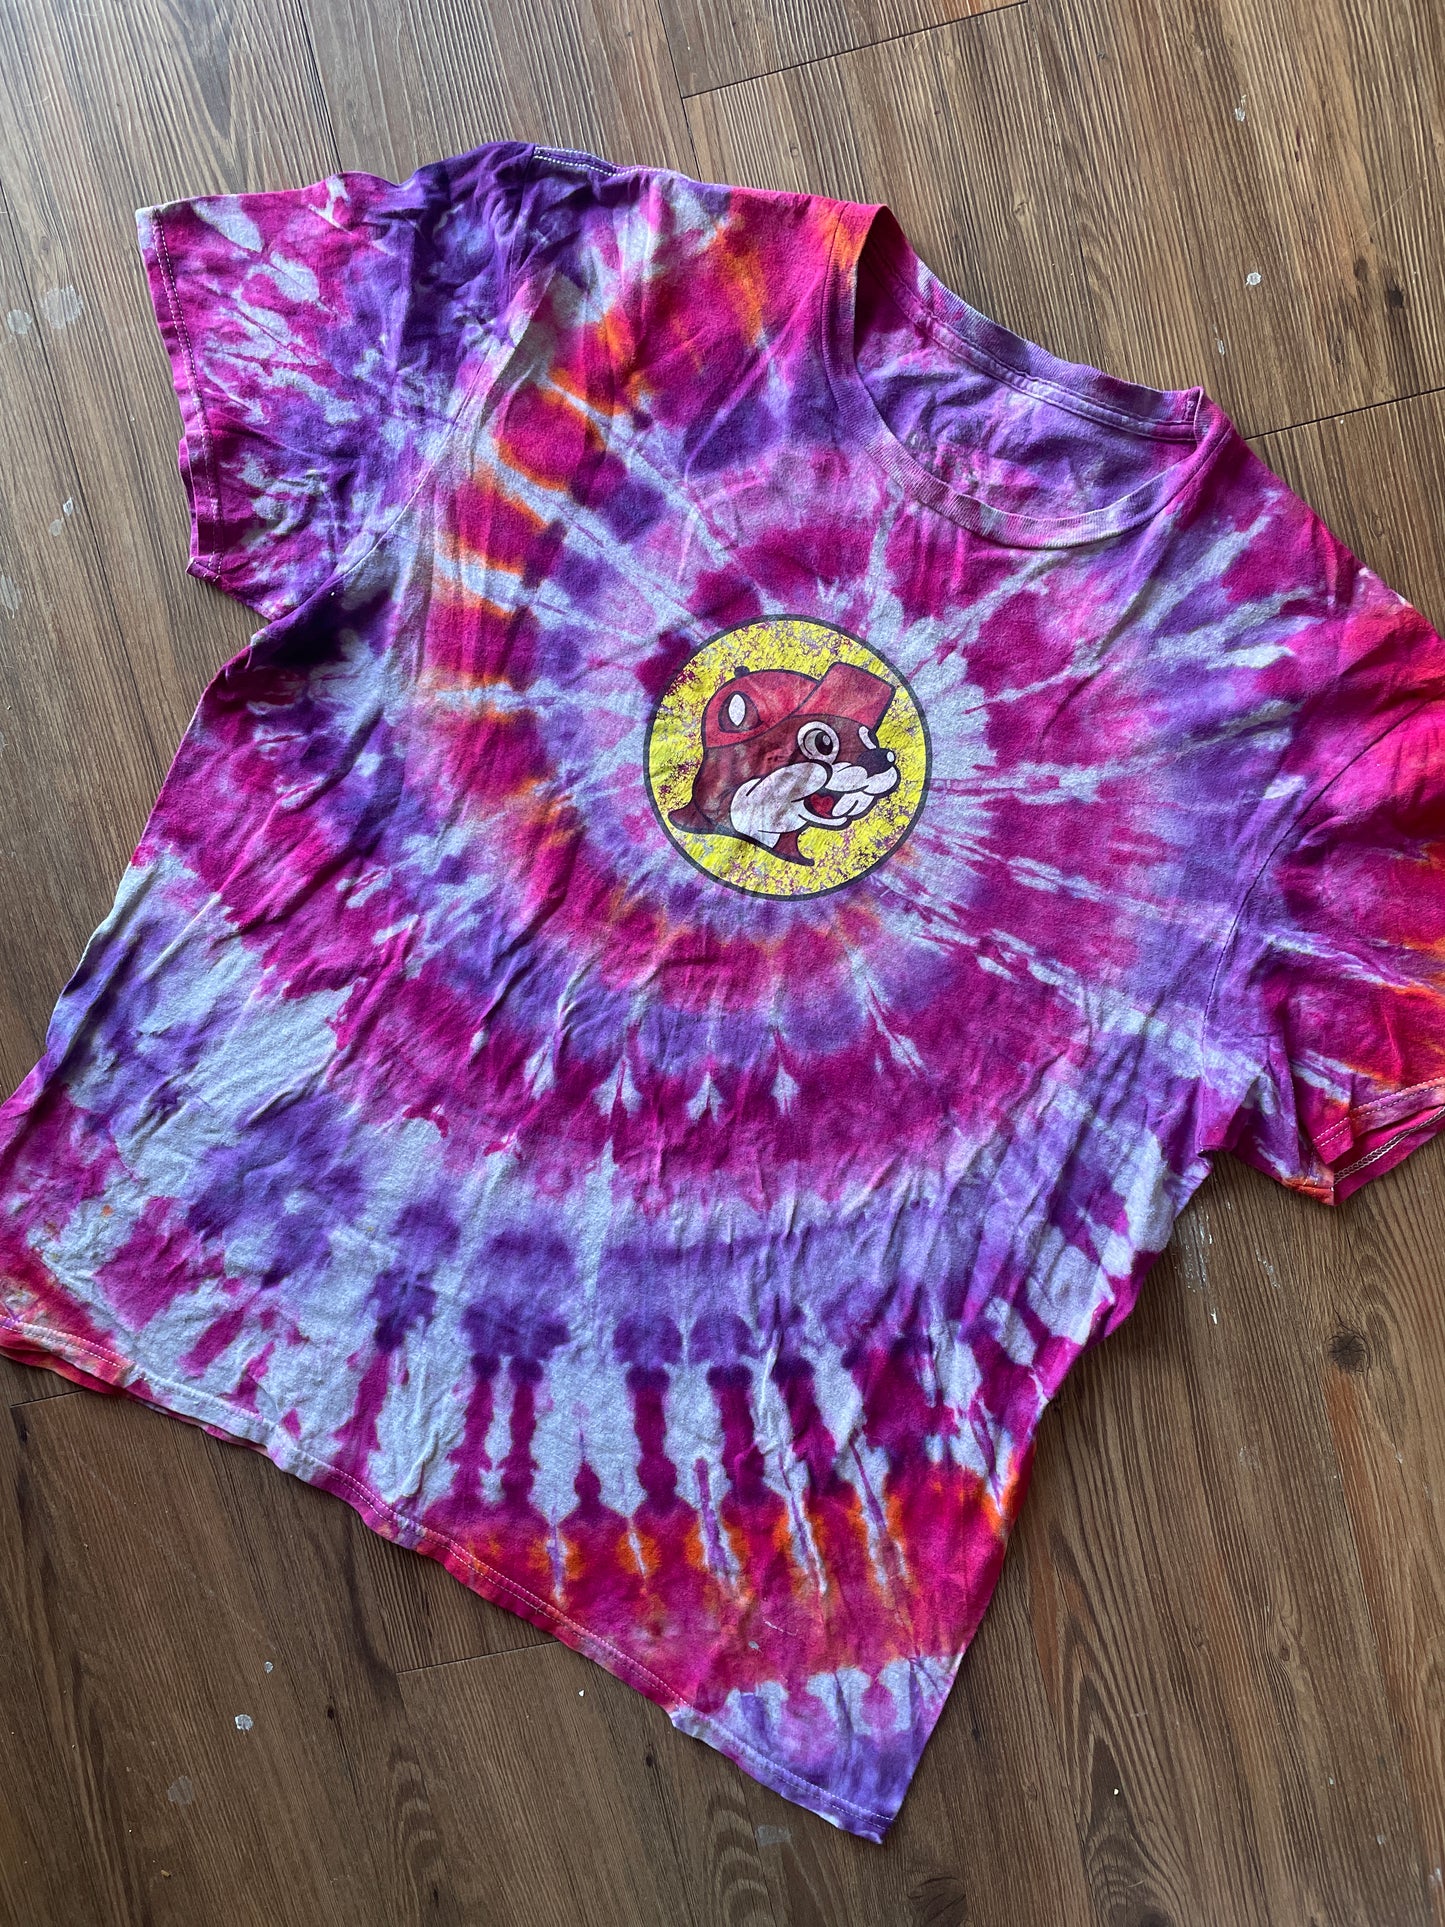 XL Women’s Buccee’s Tie Dye T-Shirt | Pink and Purple No Sleep Til Buccee’s Handmade Spiral Tie Dye Short Sleeve